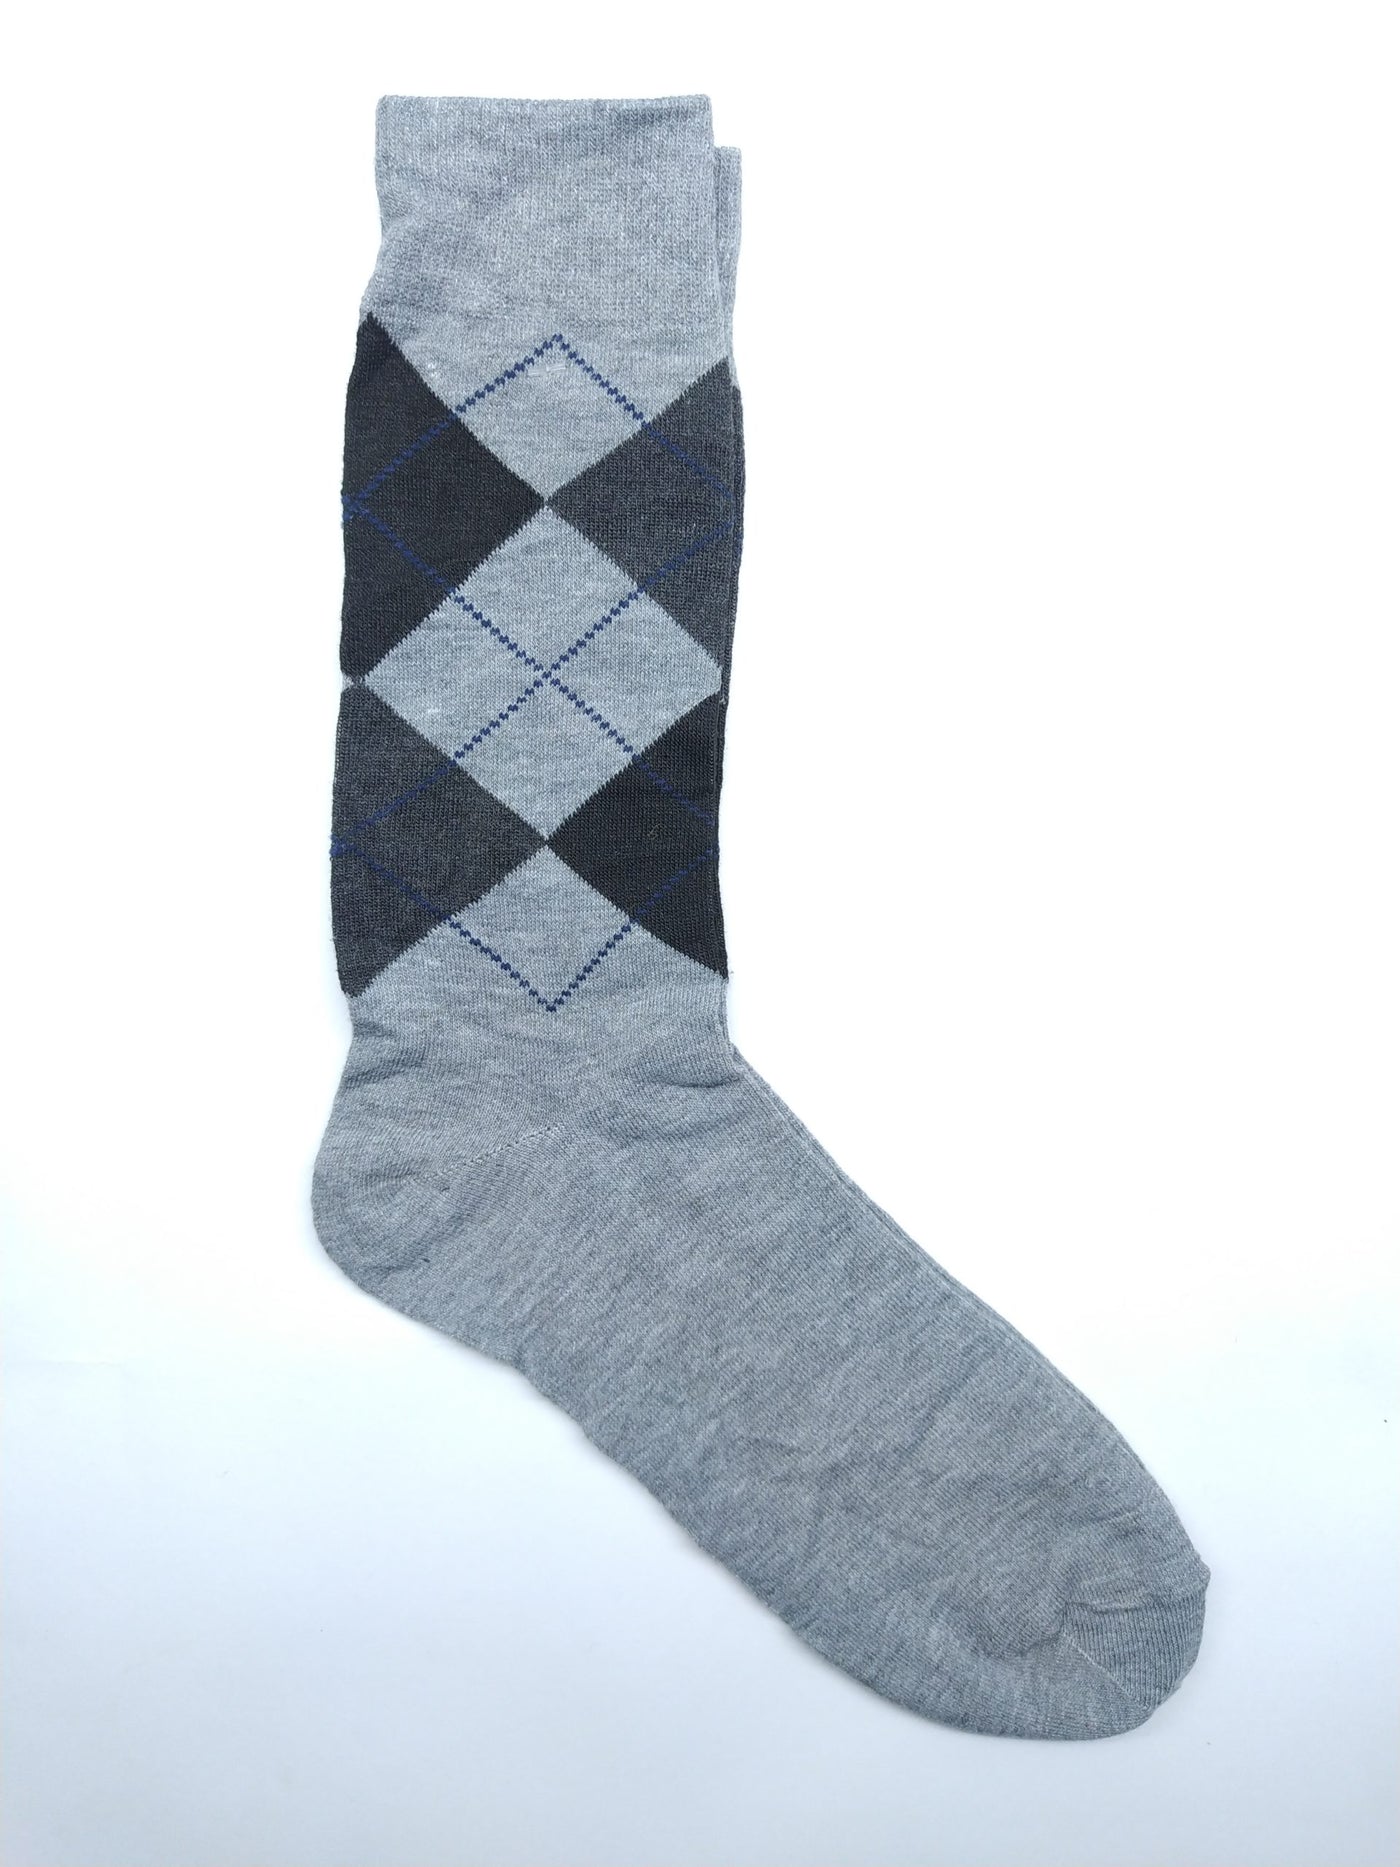 Charcoal Jacquard Diamond Knee High Socks - SOXO #1 Imported Socks Brand in Pakistan